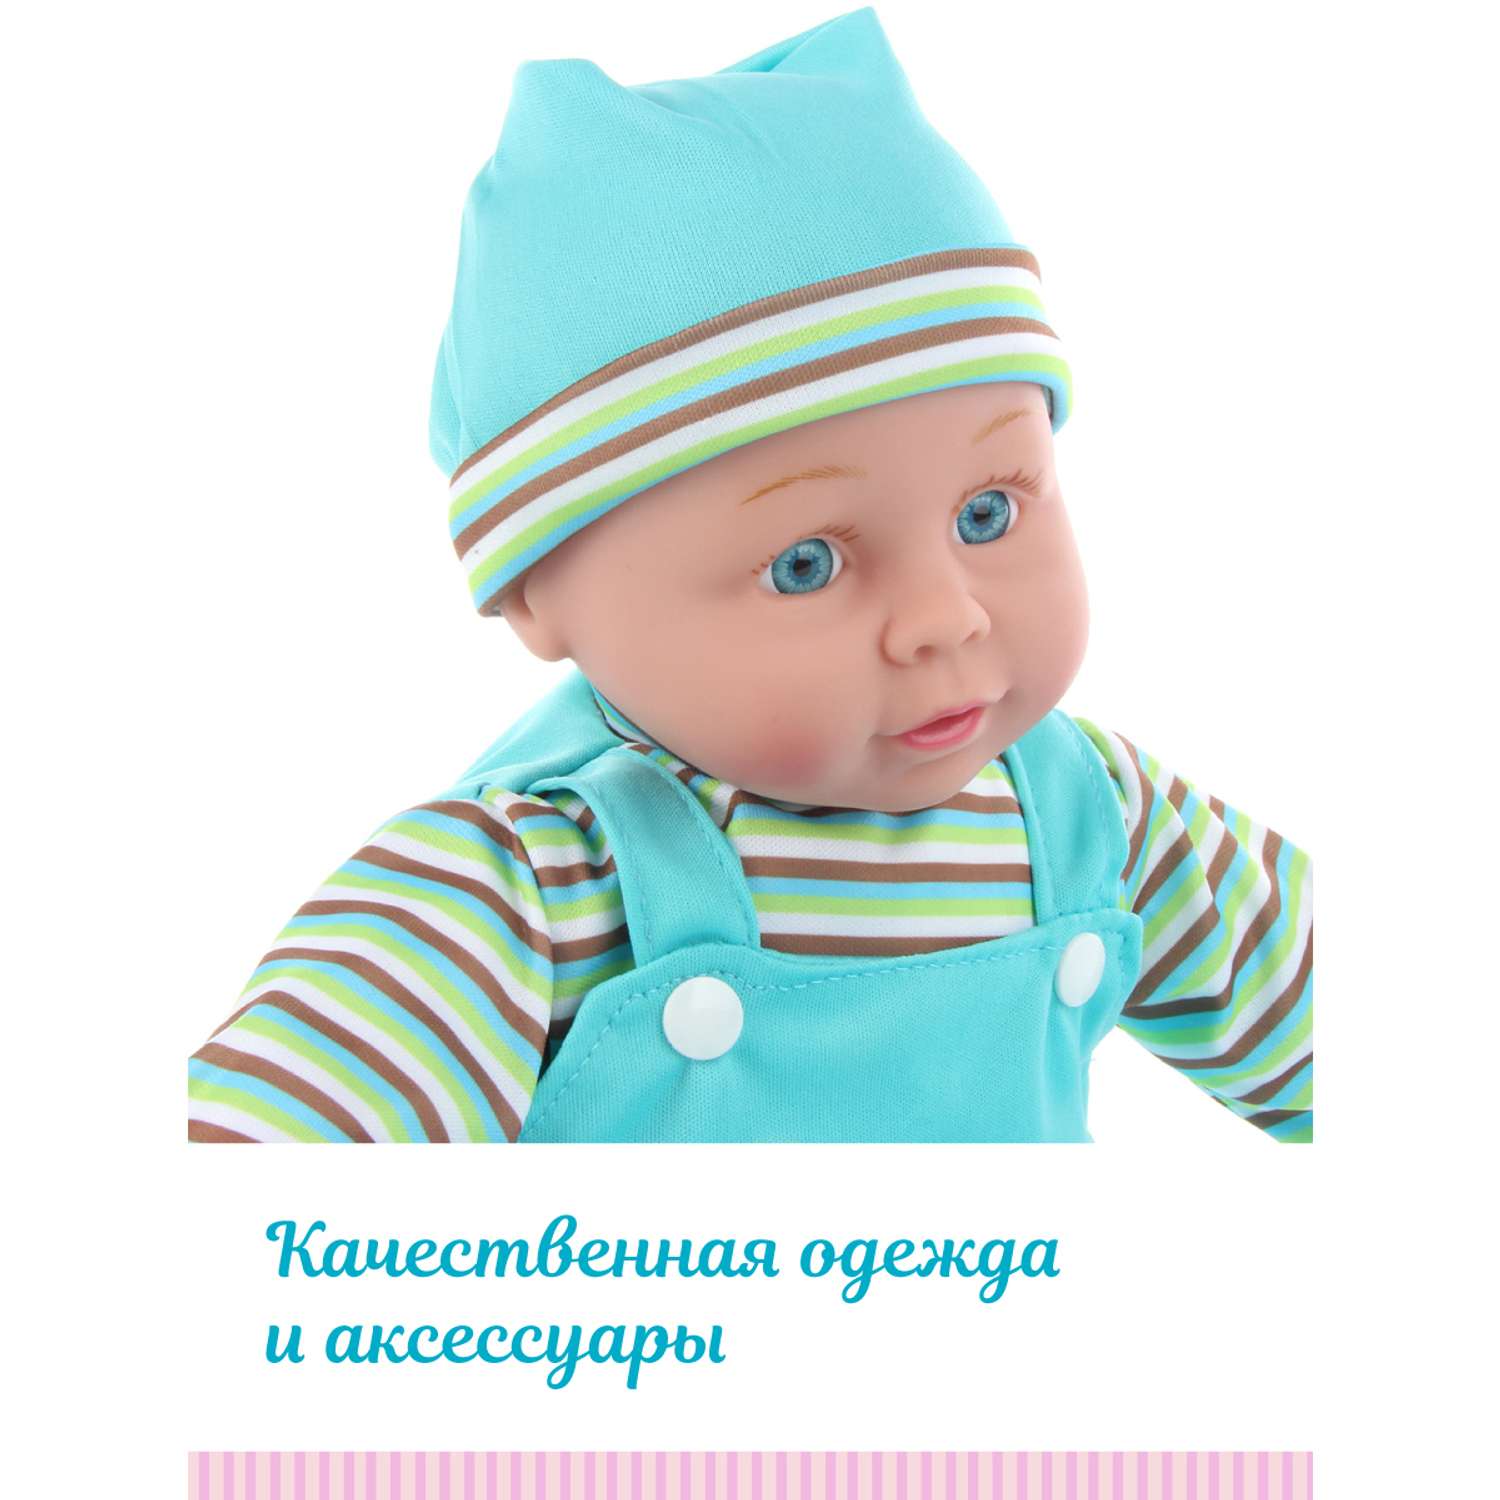 Пупс Lisa Doll в голубом костюме 40 см русская озвучка 97046 - фото 9